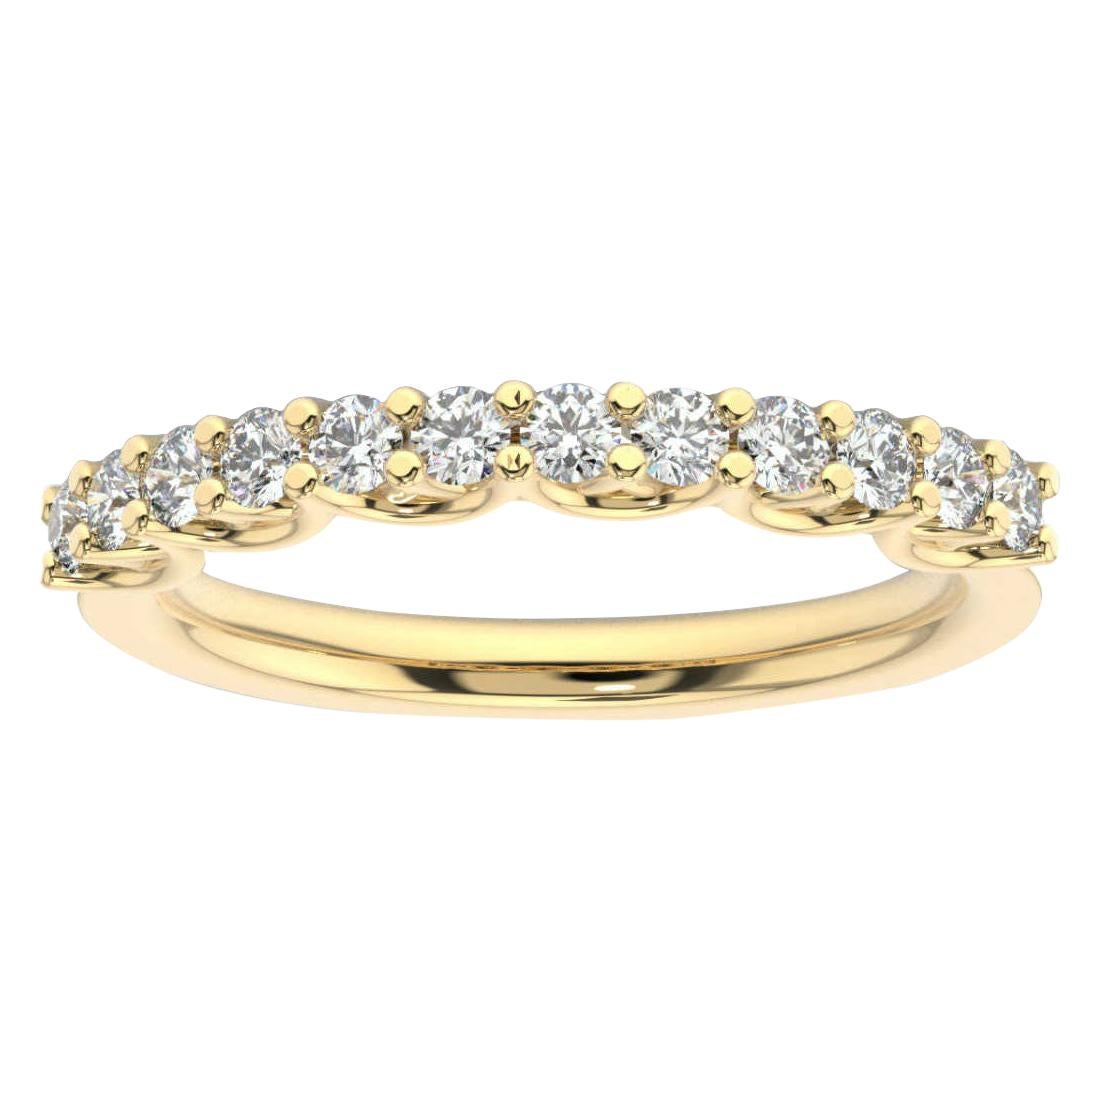 14K Yellow Gold Olbia Diamond Ring '1/2 Ct. Tw'